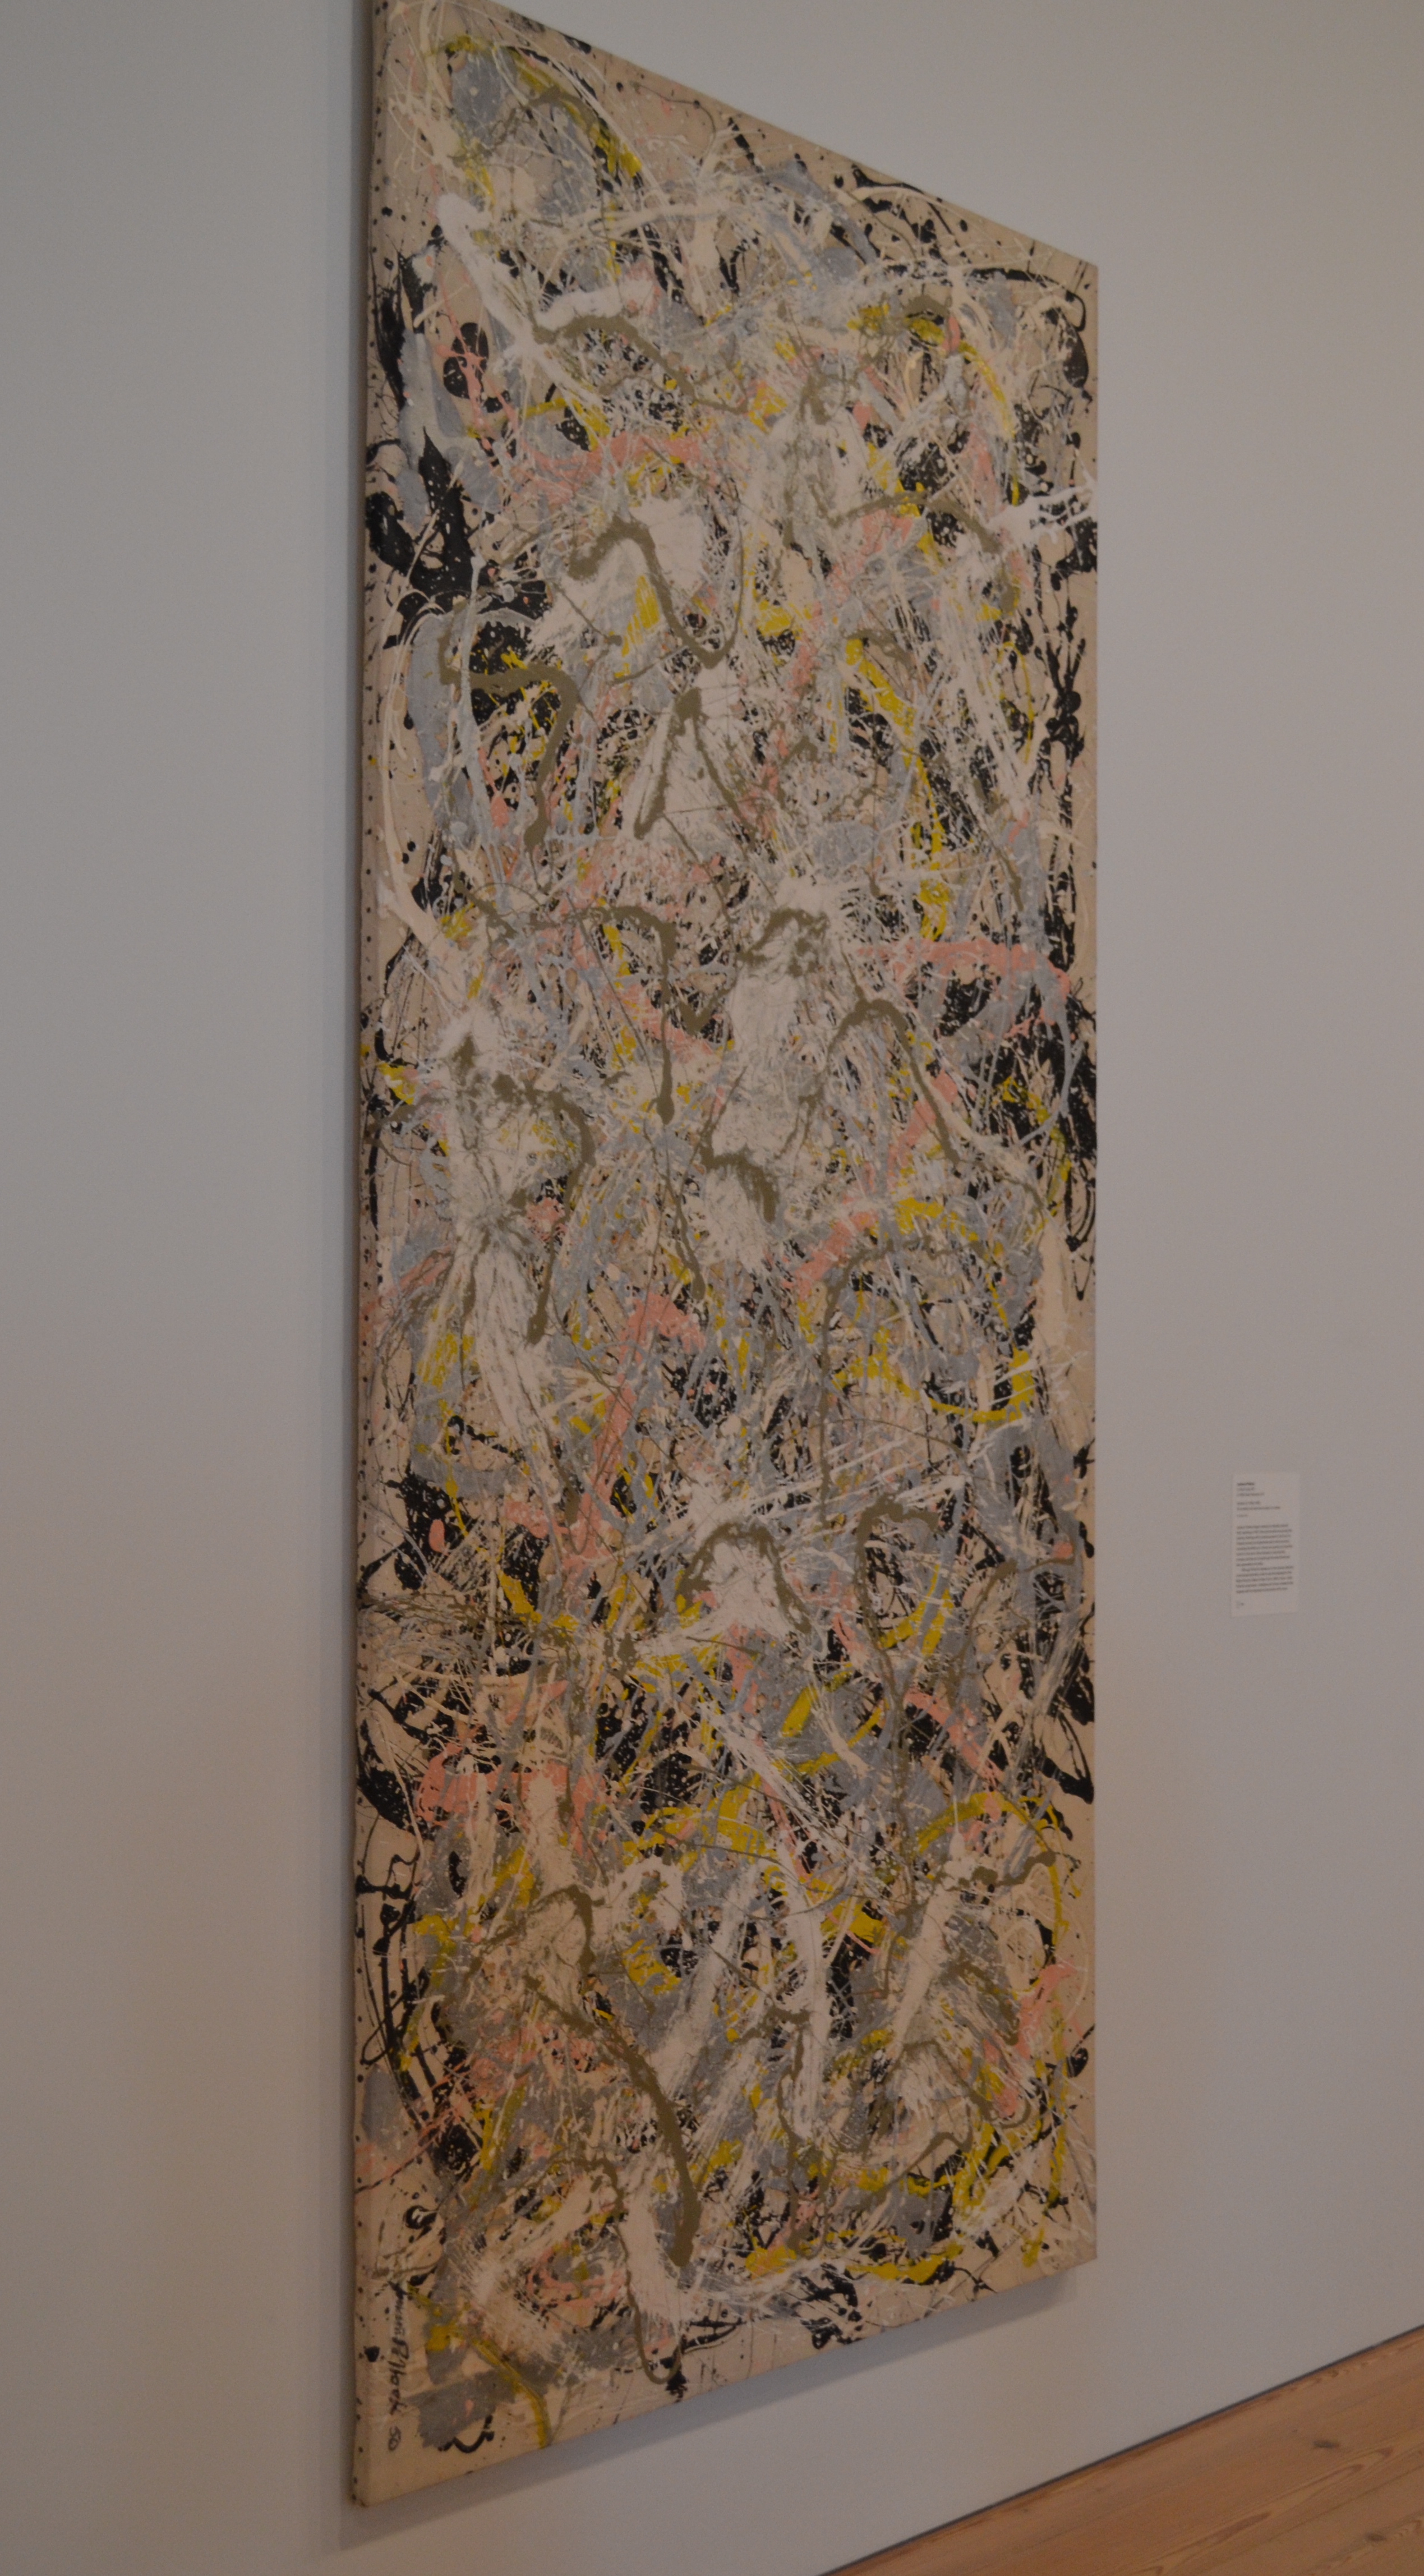 Jackson Pollock, Number 27, 1950